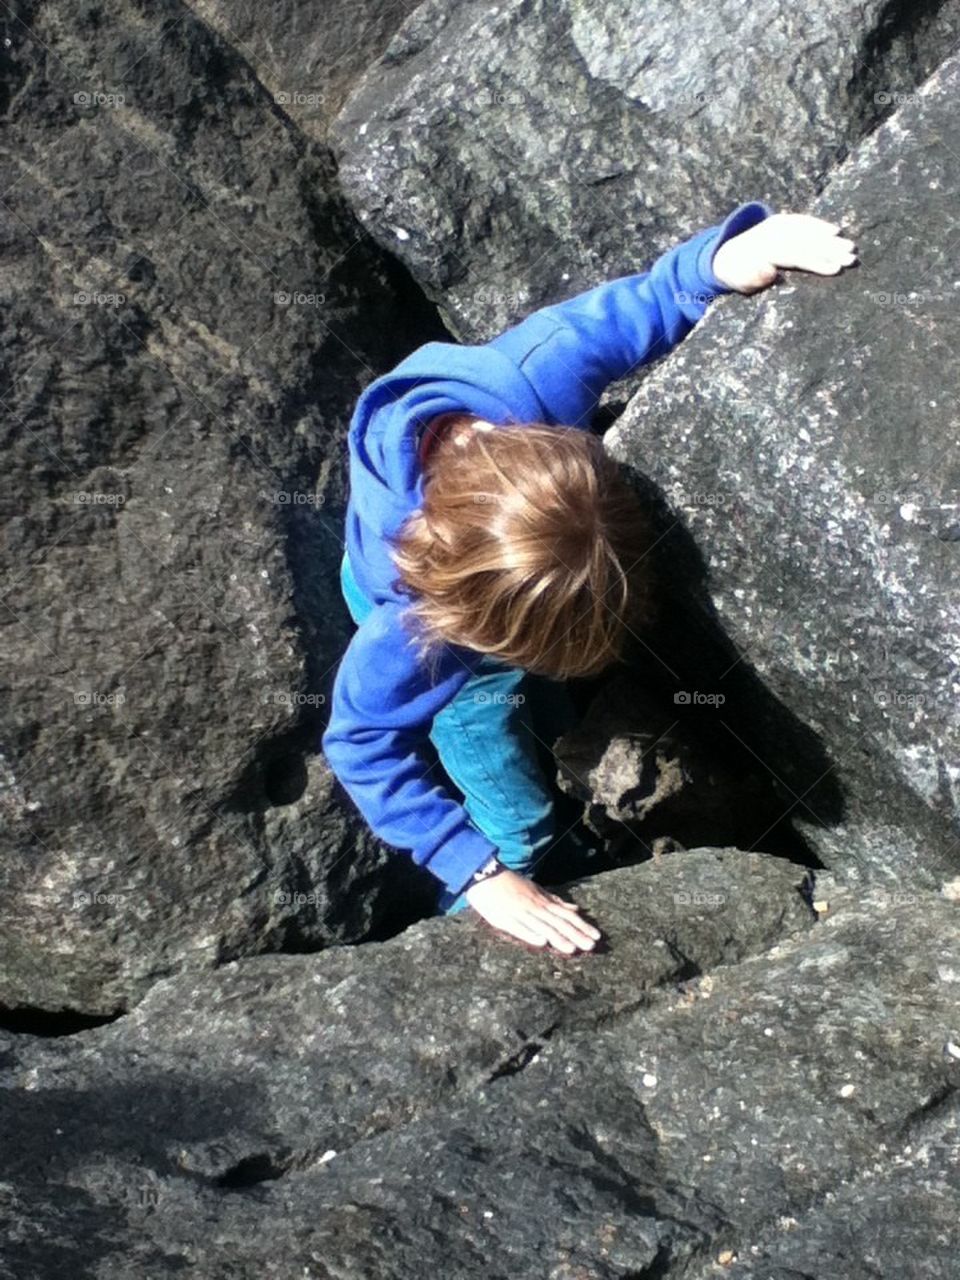 Cousin goes rock climbing 